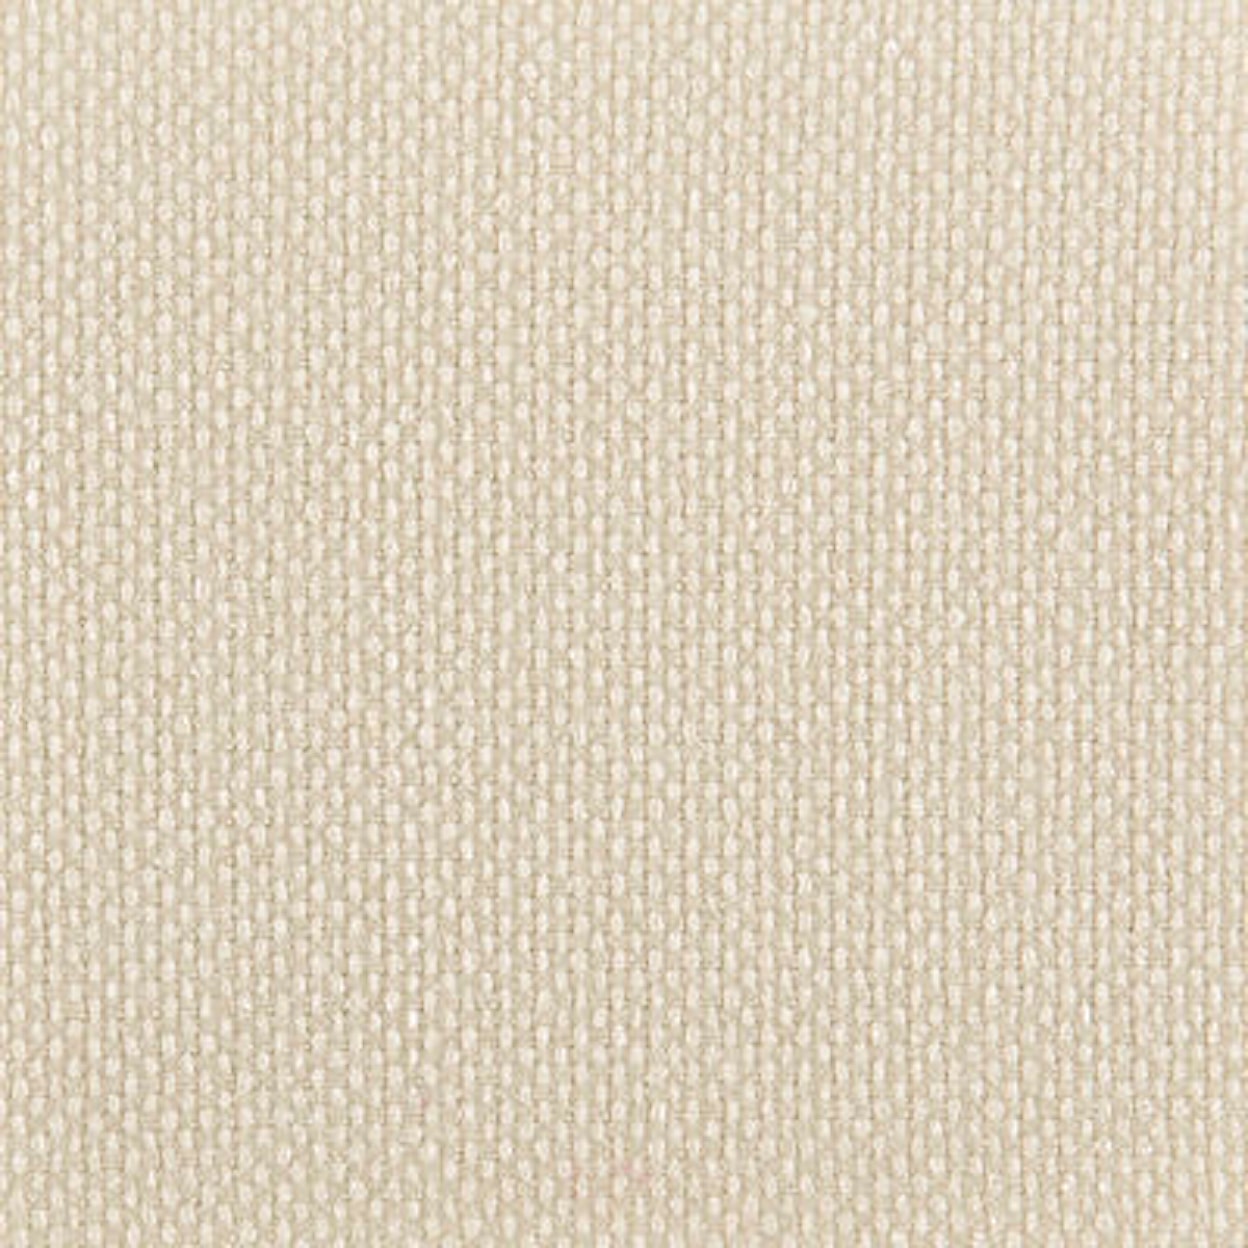 Cream Body Fabric 2461-34CC